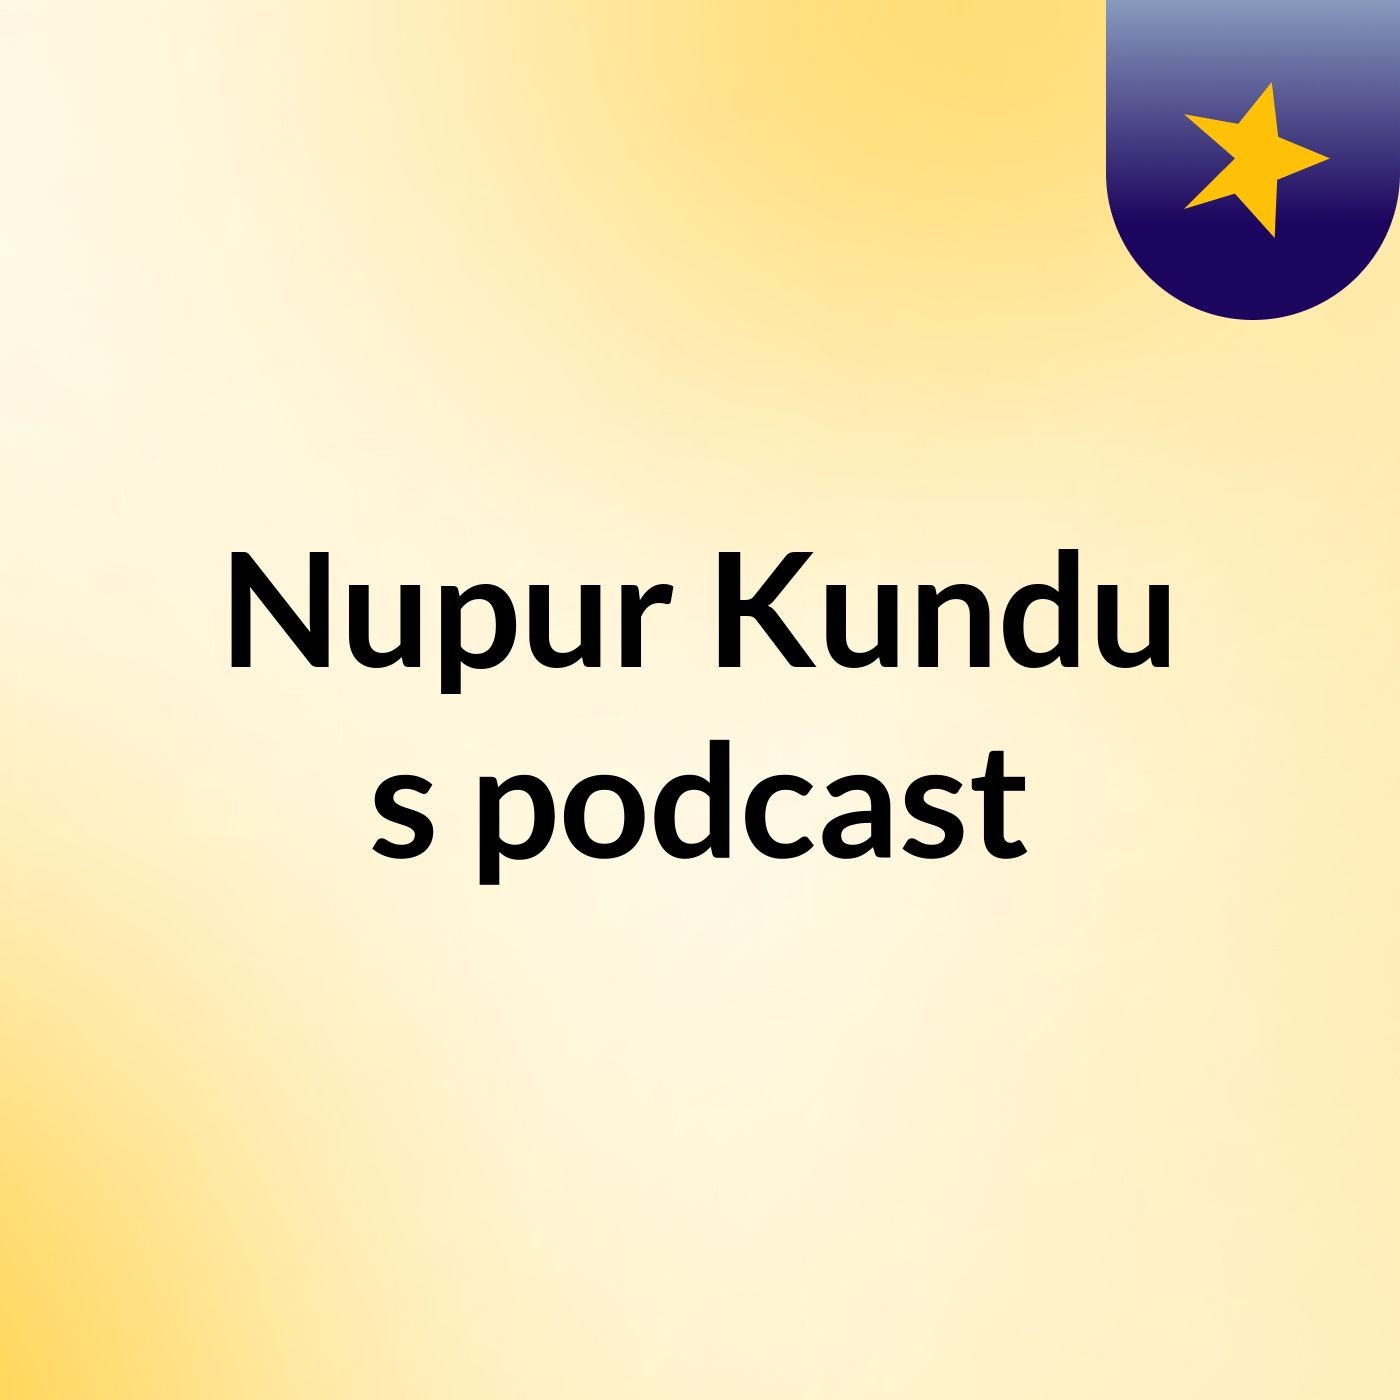 Nupur Kundu's podcast